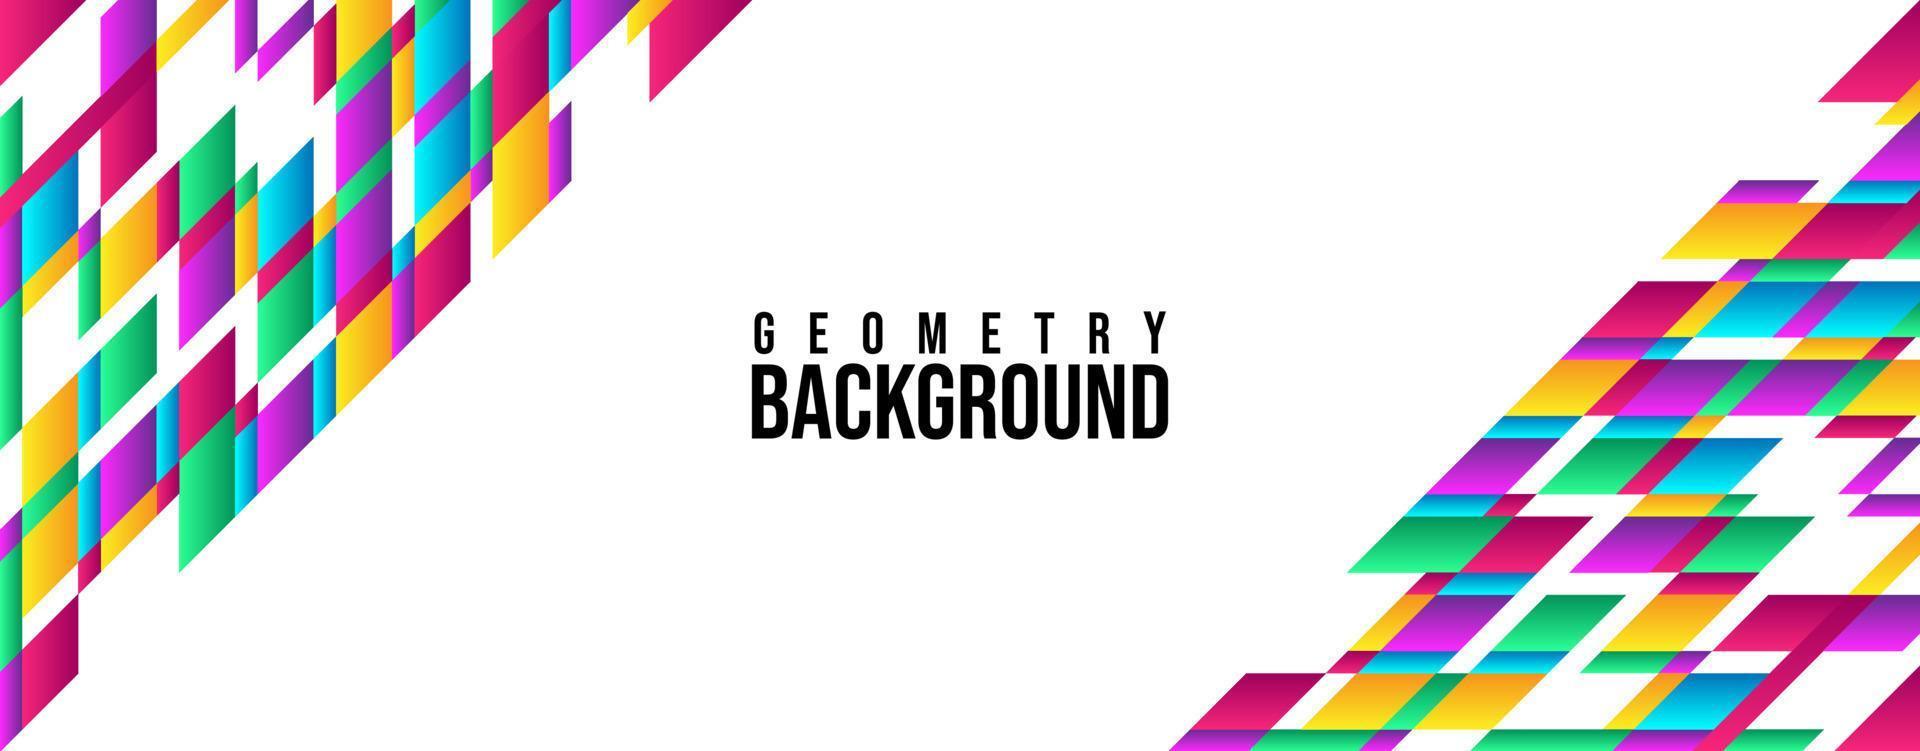 Beautiful Geometry Background Template Design vector